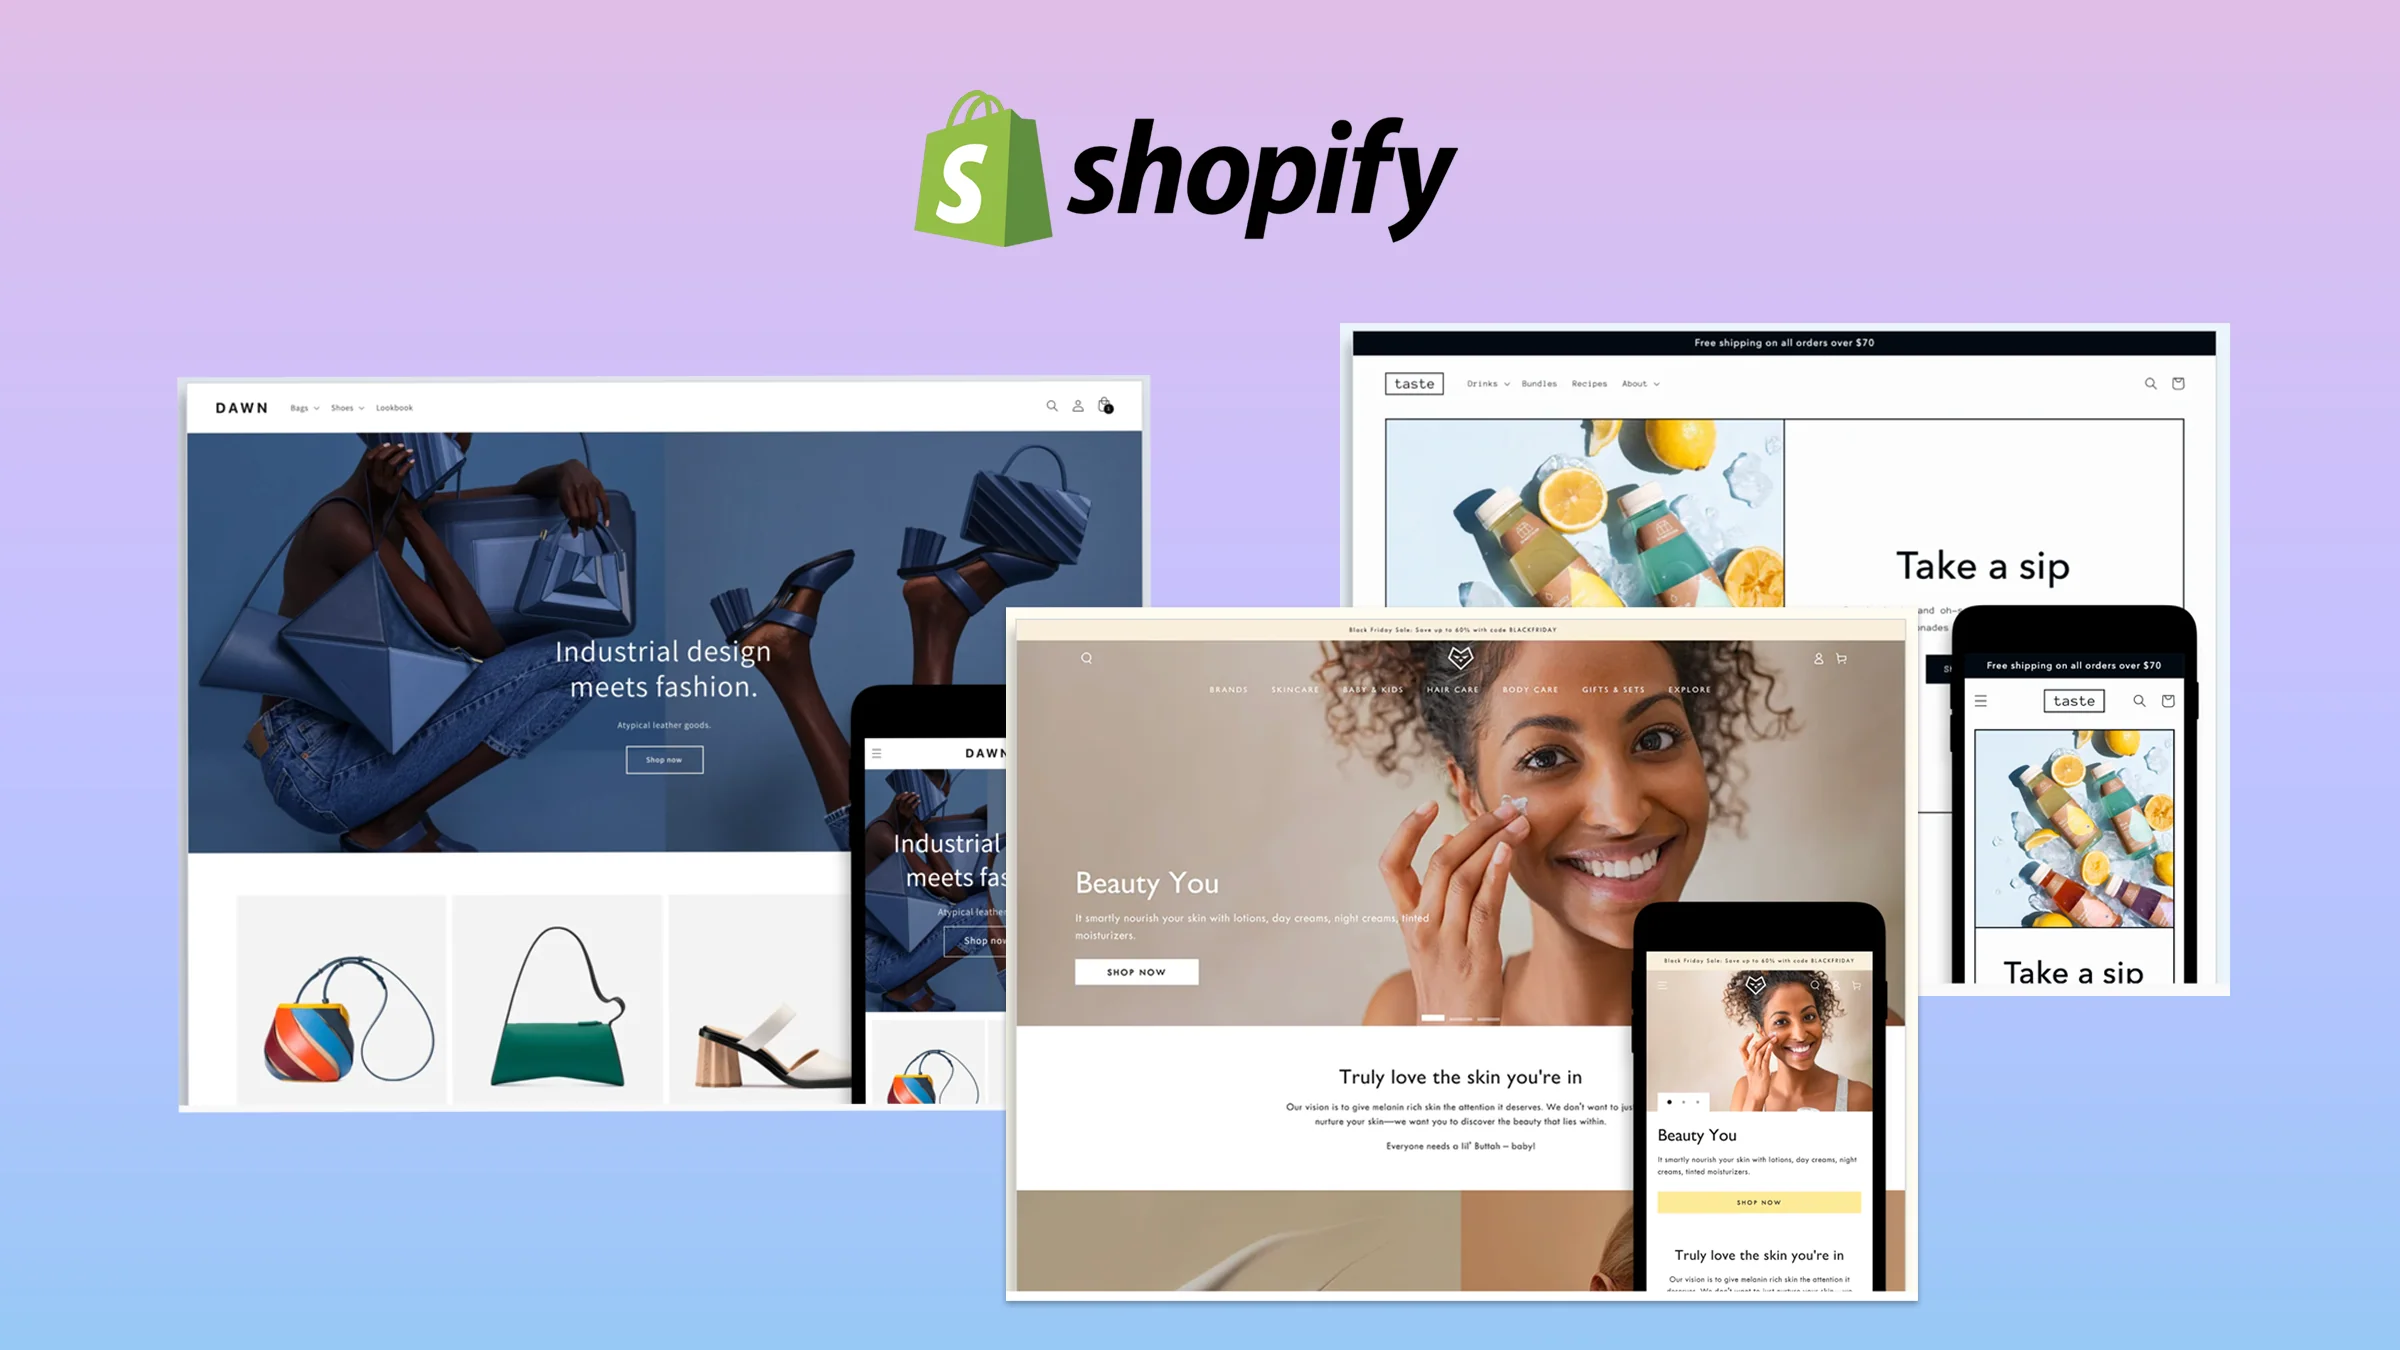 shopify 2.0 benefits